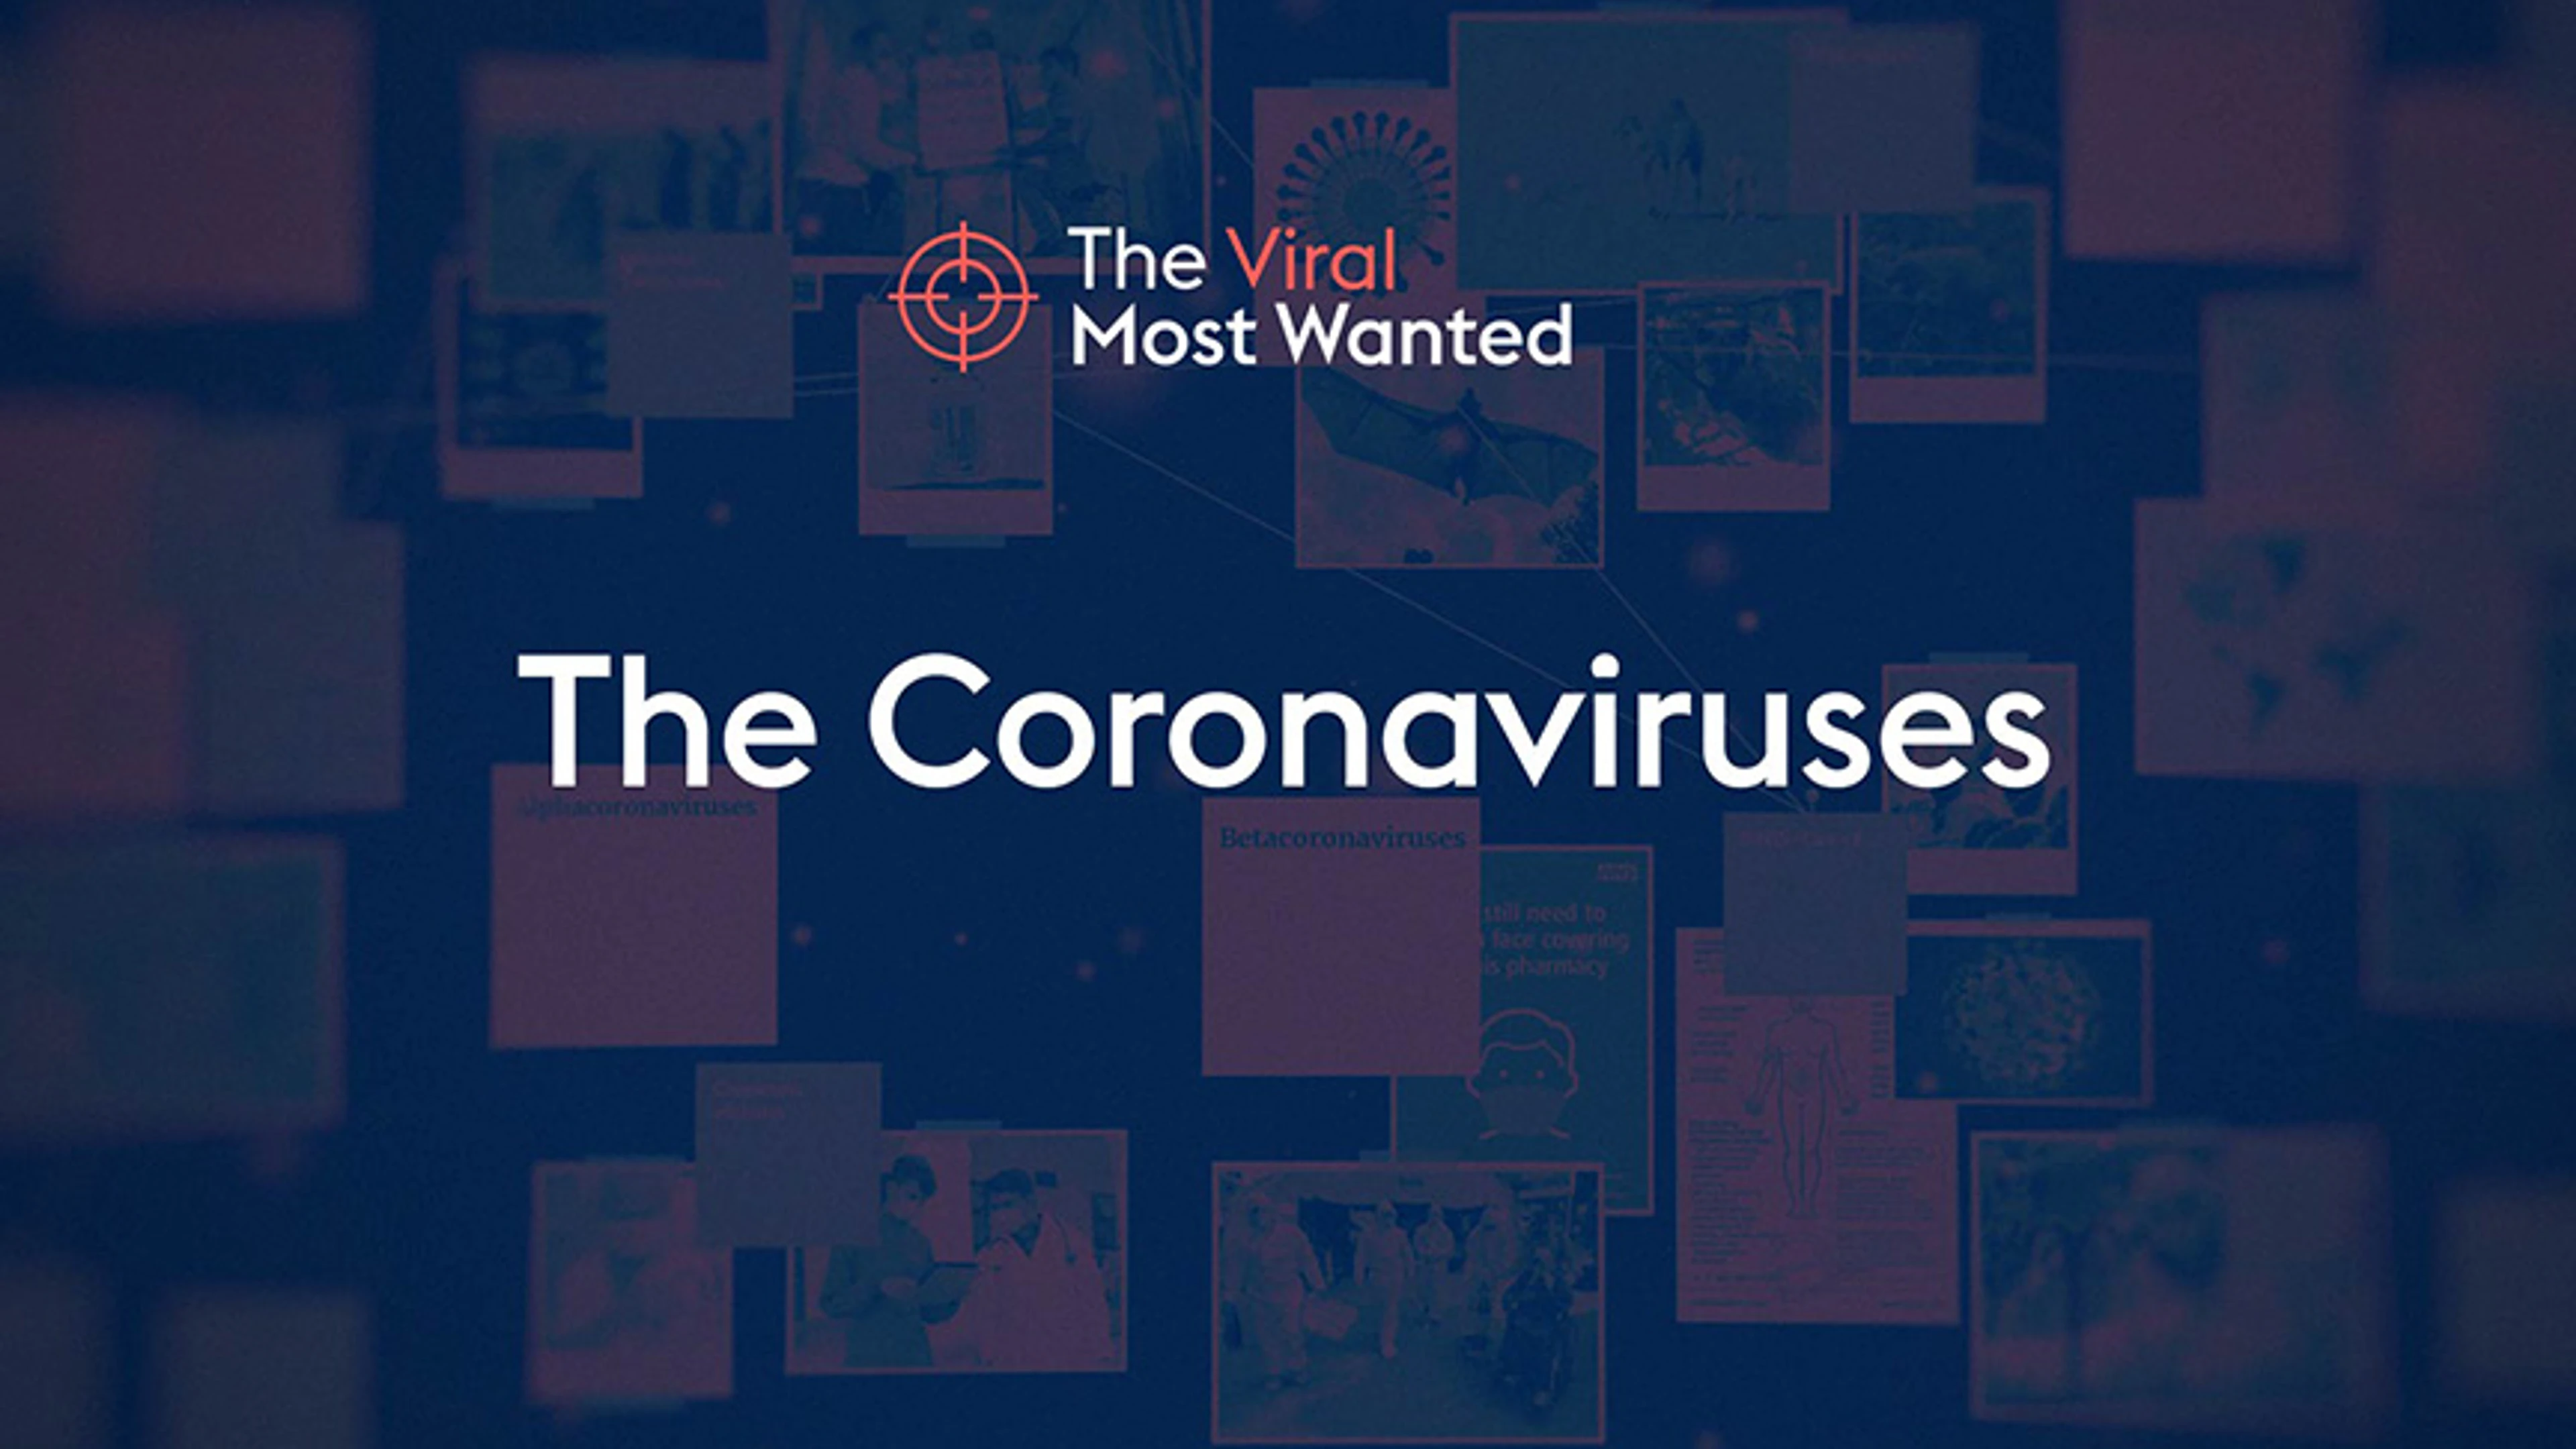 Coronavirus header image blg size V2